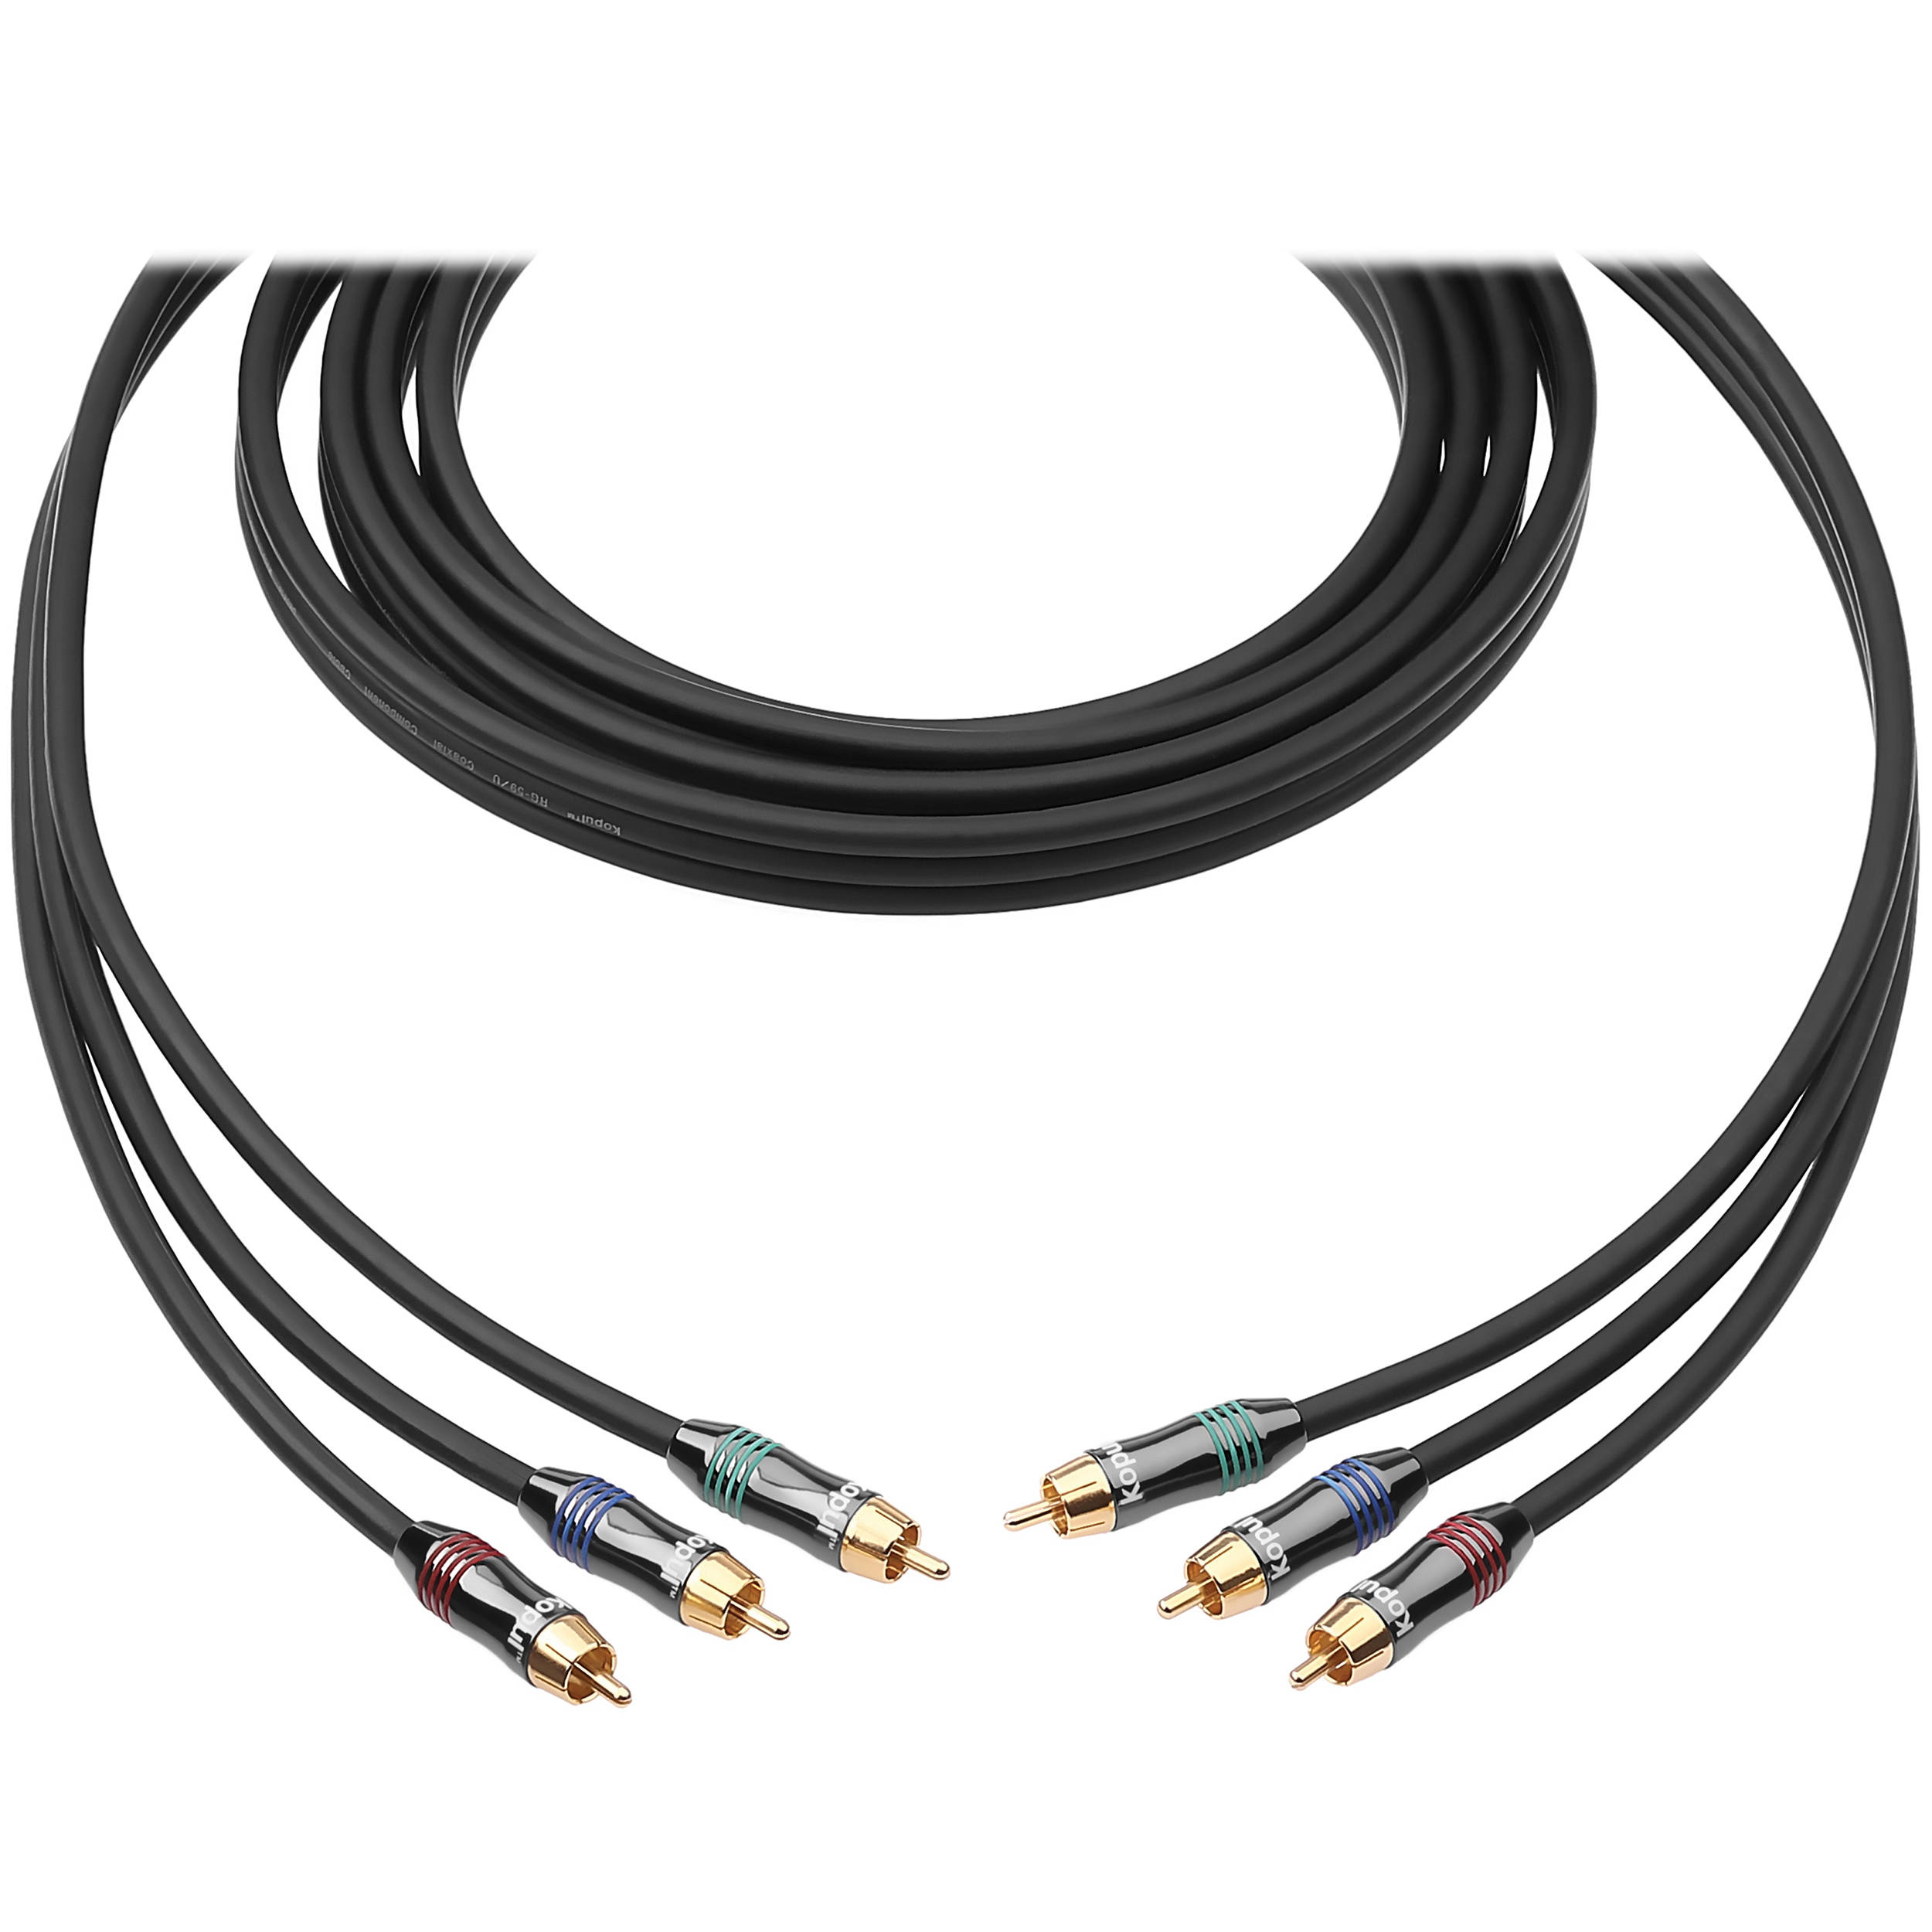 Kopul 10' Premium Series RCA Component Video Cable